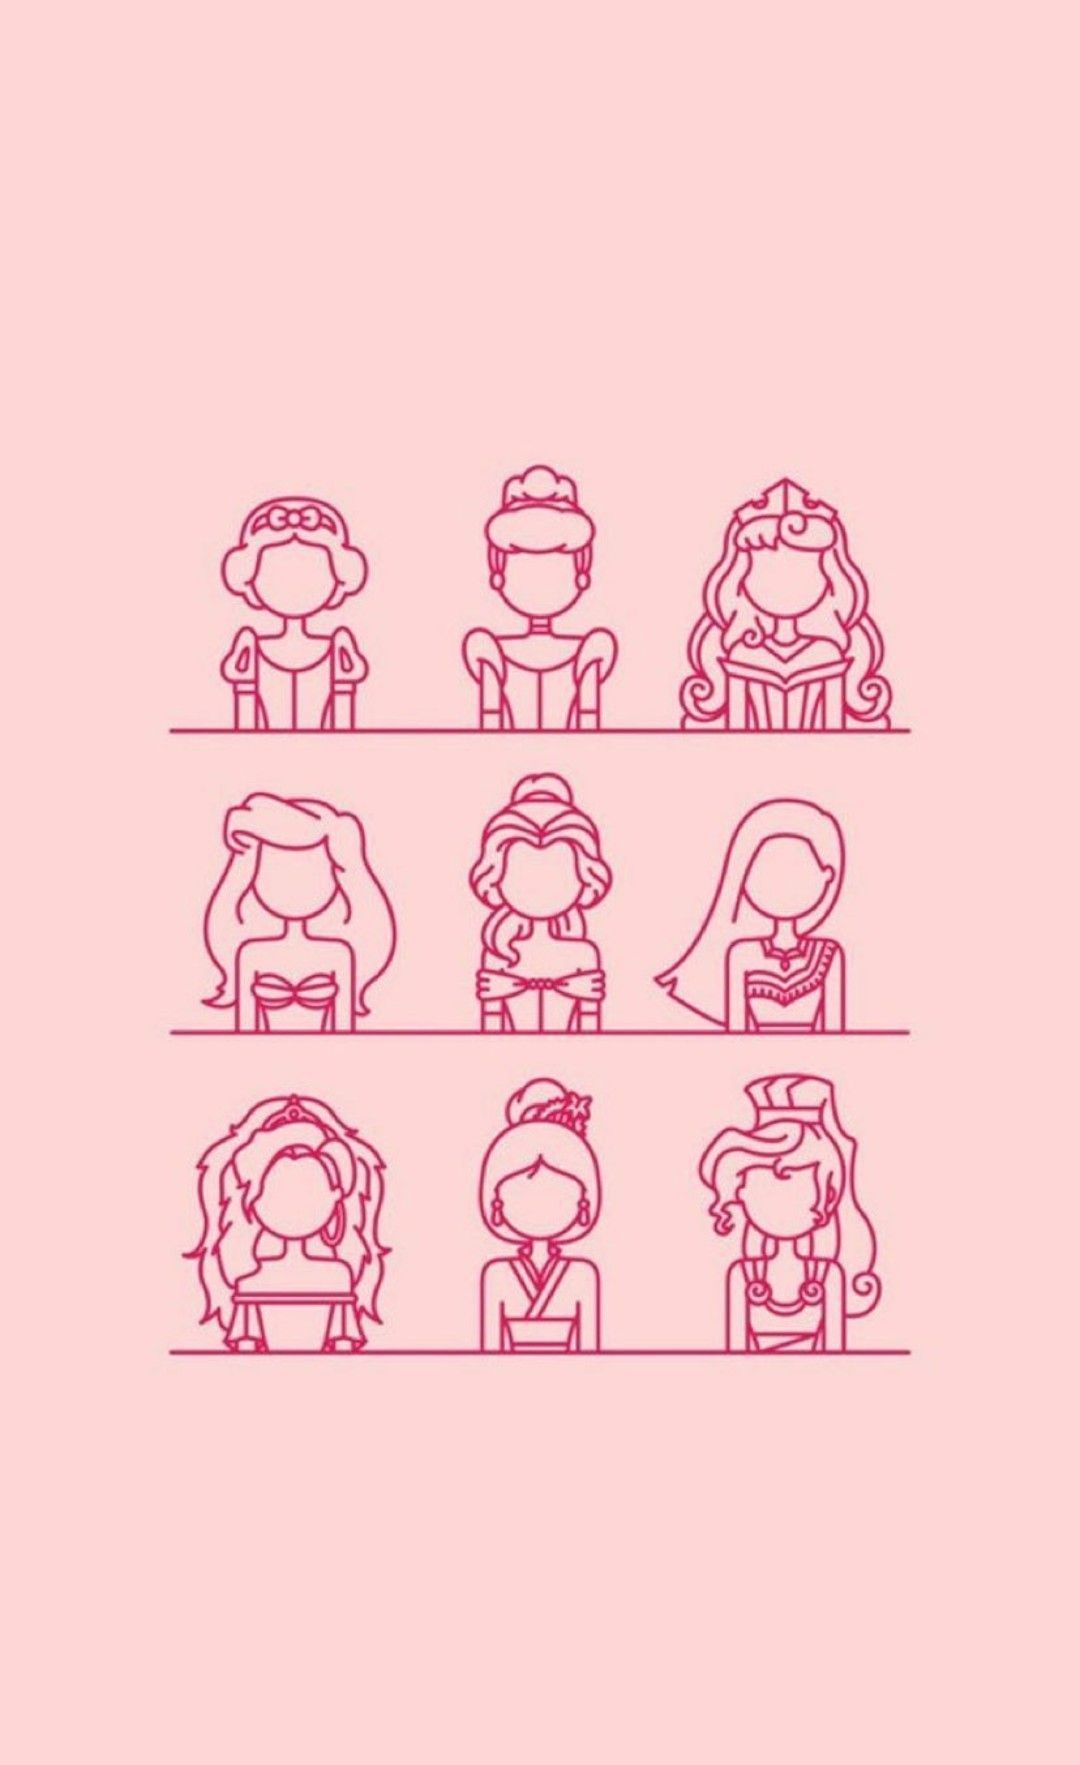 A set of icons for the princesses - Disney, princess, Mulan, Belle